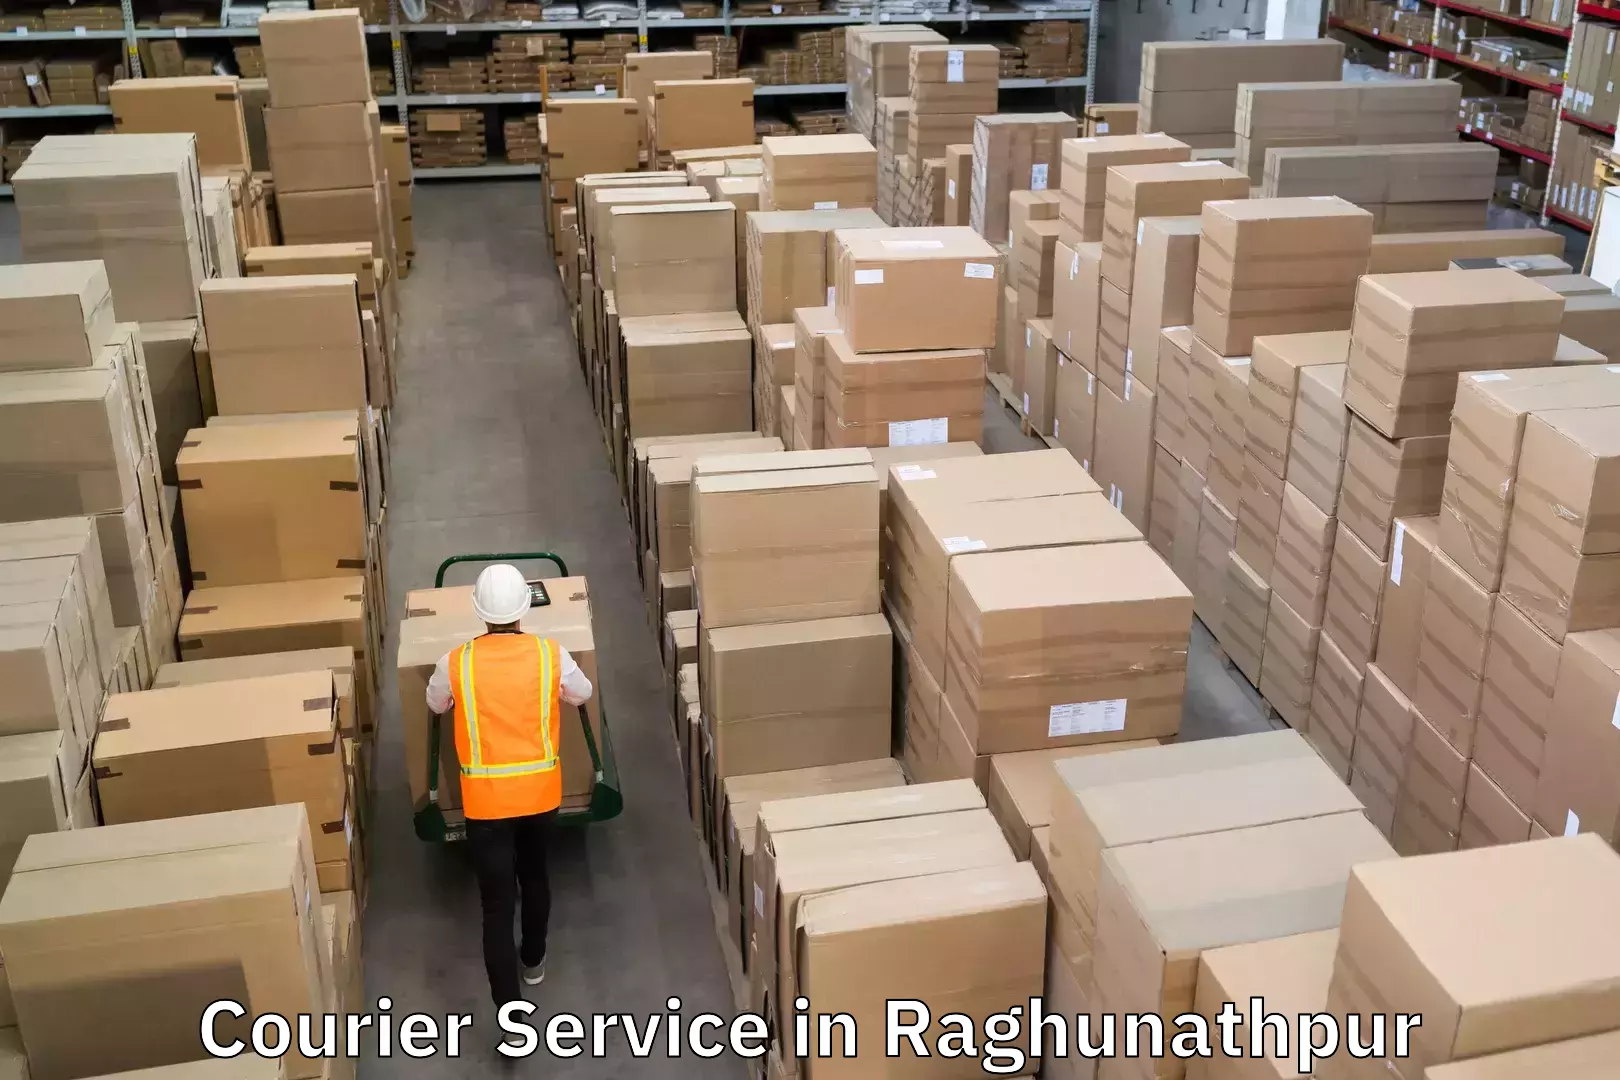 Budget-friendly shipping in Raghunathpur